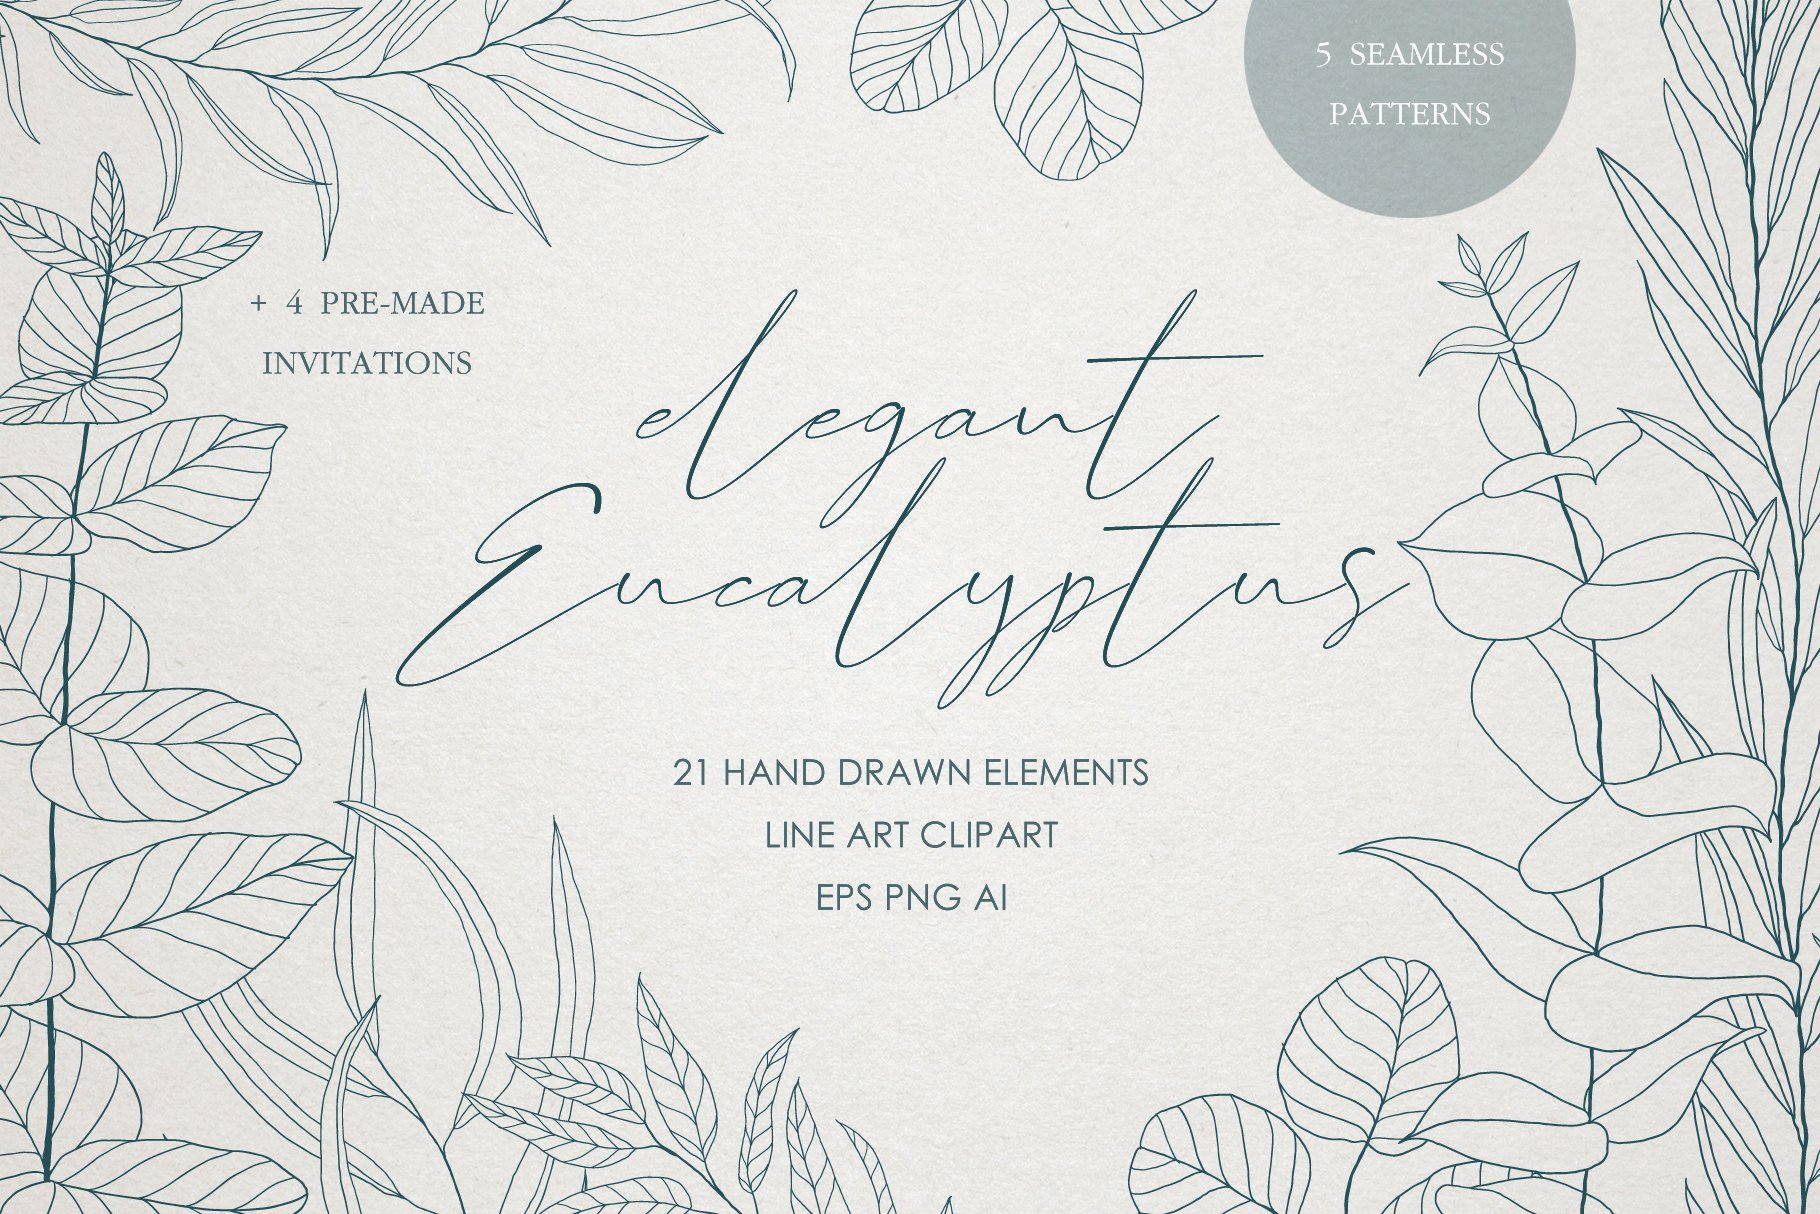 Eucalyptus Leaves Line Art Clipart cover image.